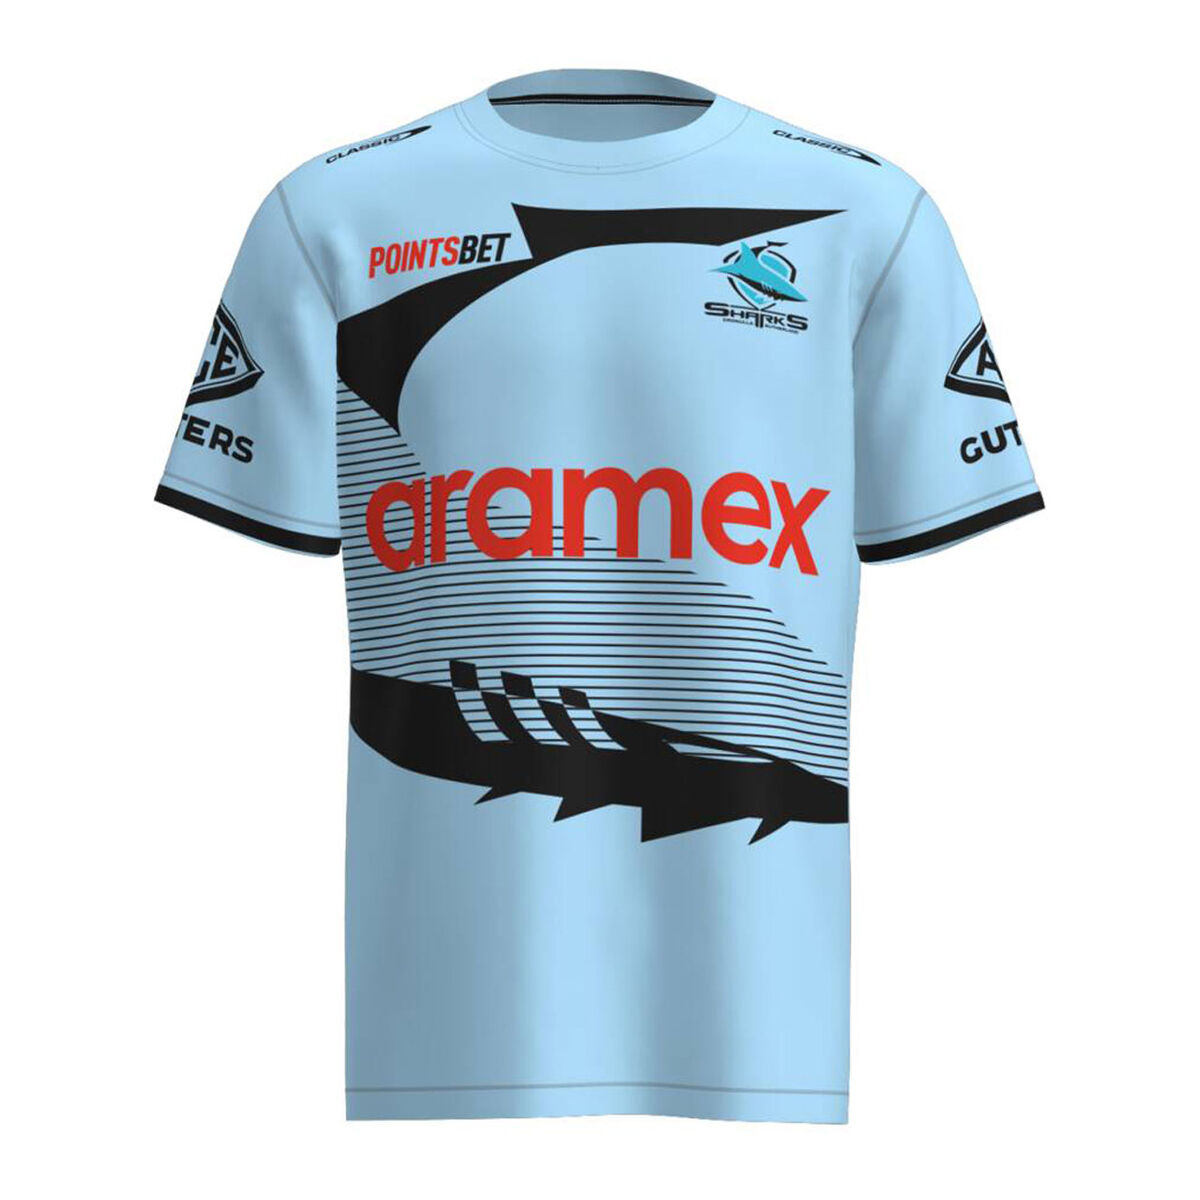 RL Jersey Spotter on X: 2016 Cronulla Sharks members jersey by